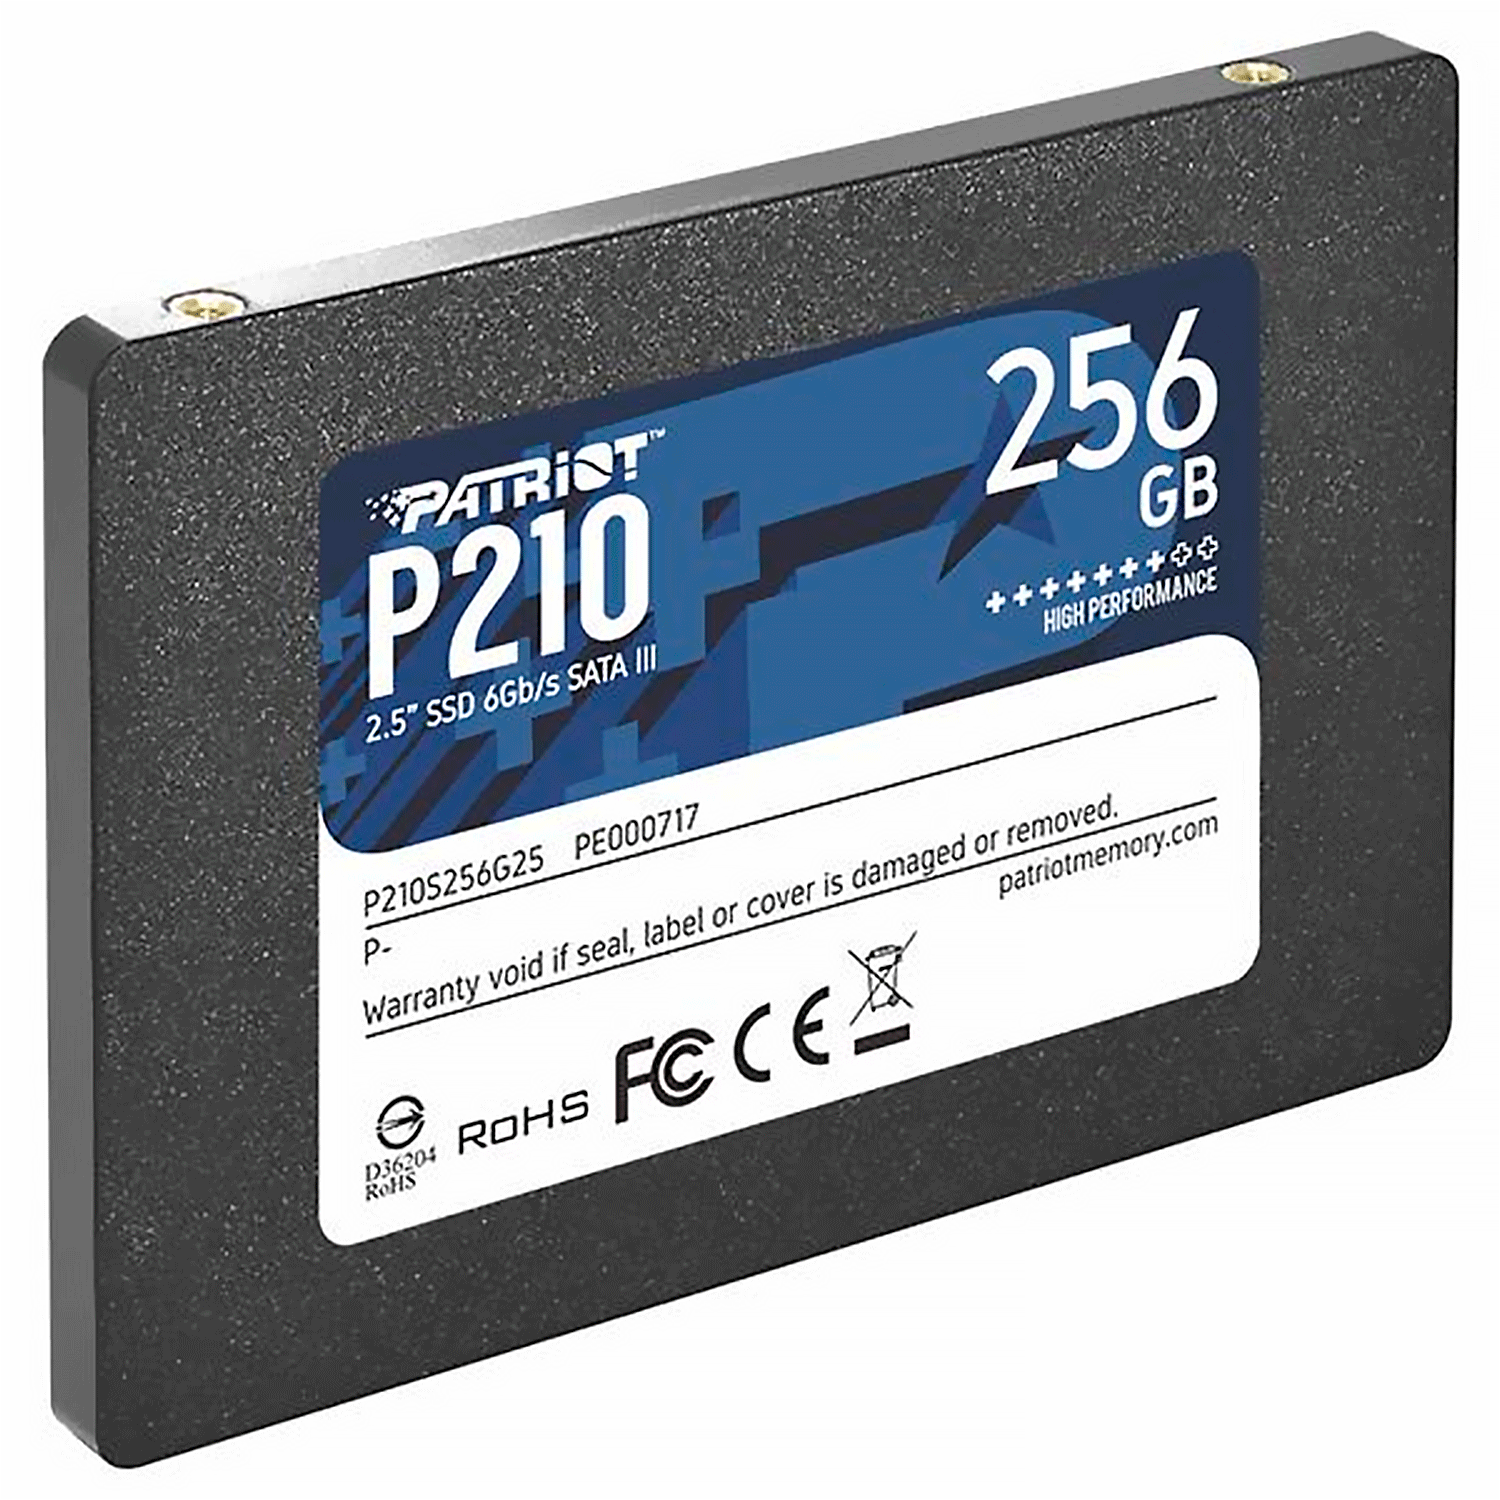 SSD Patriot P210 256GB 2.5" SATA 3 - P210S256G25